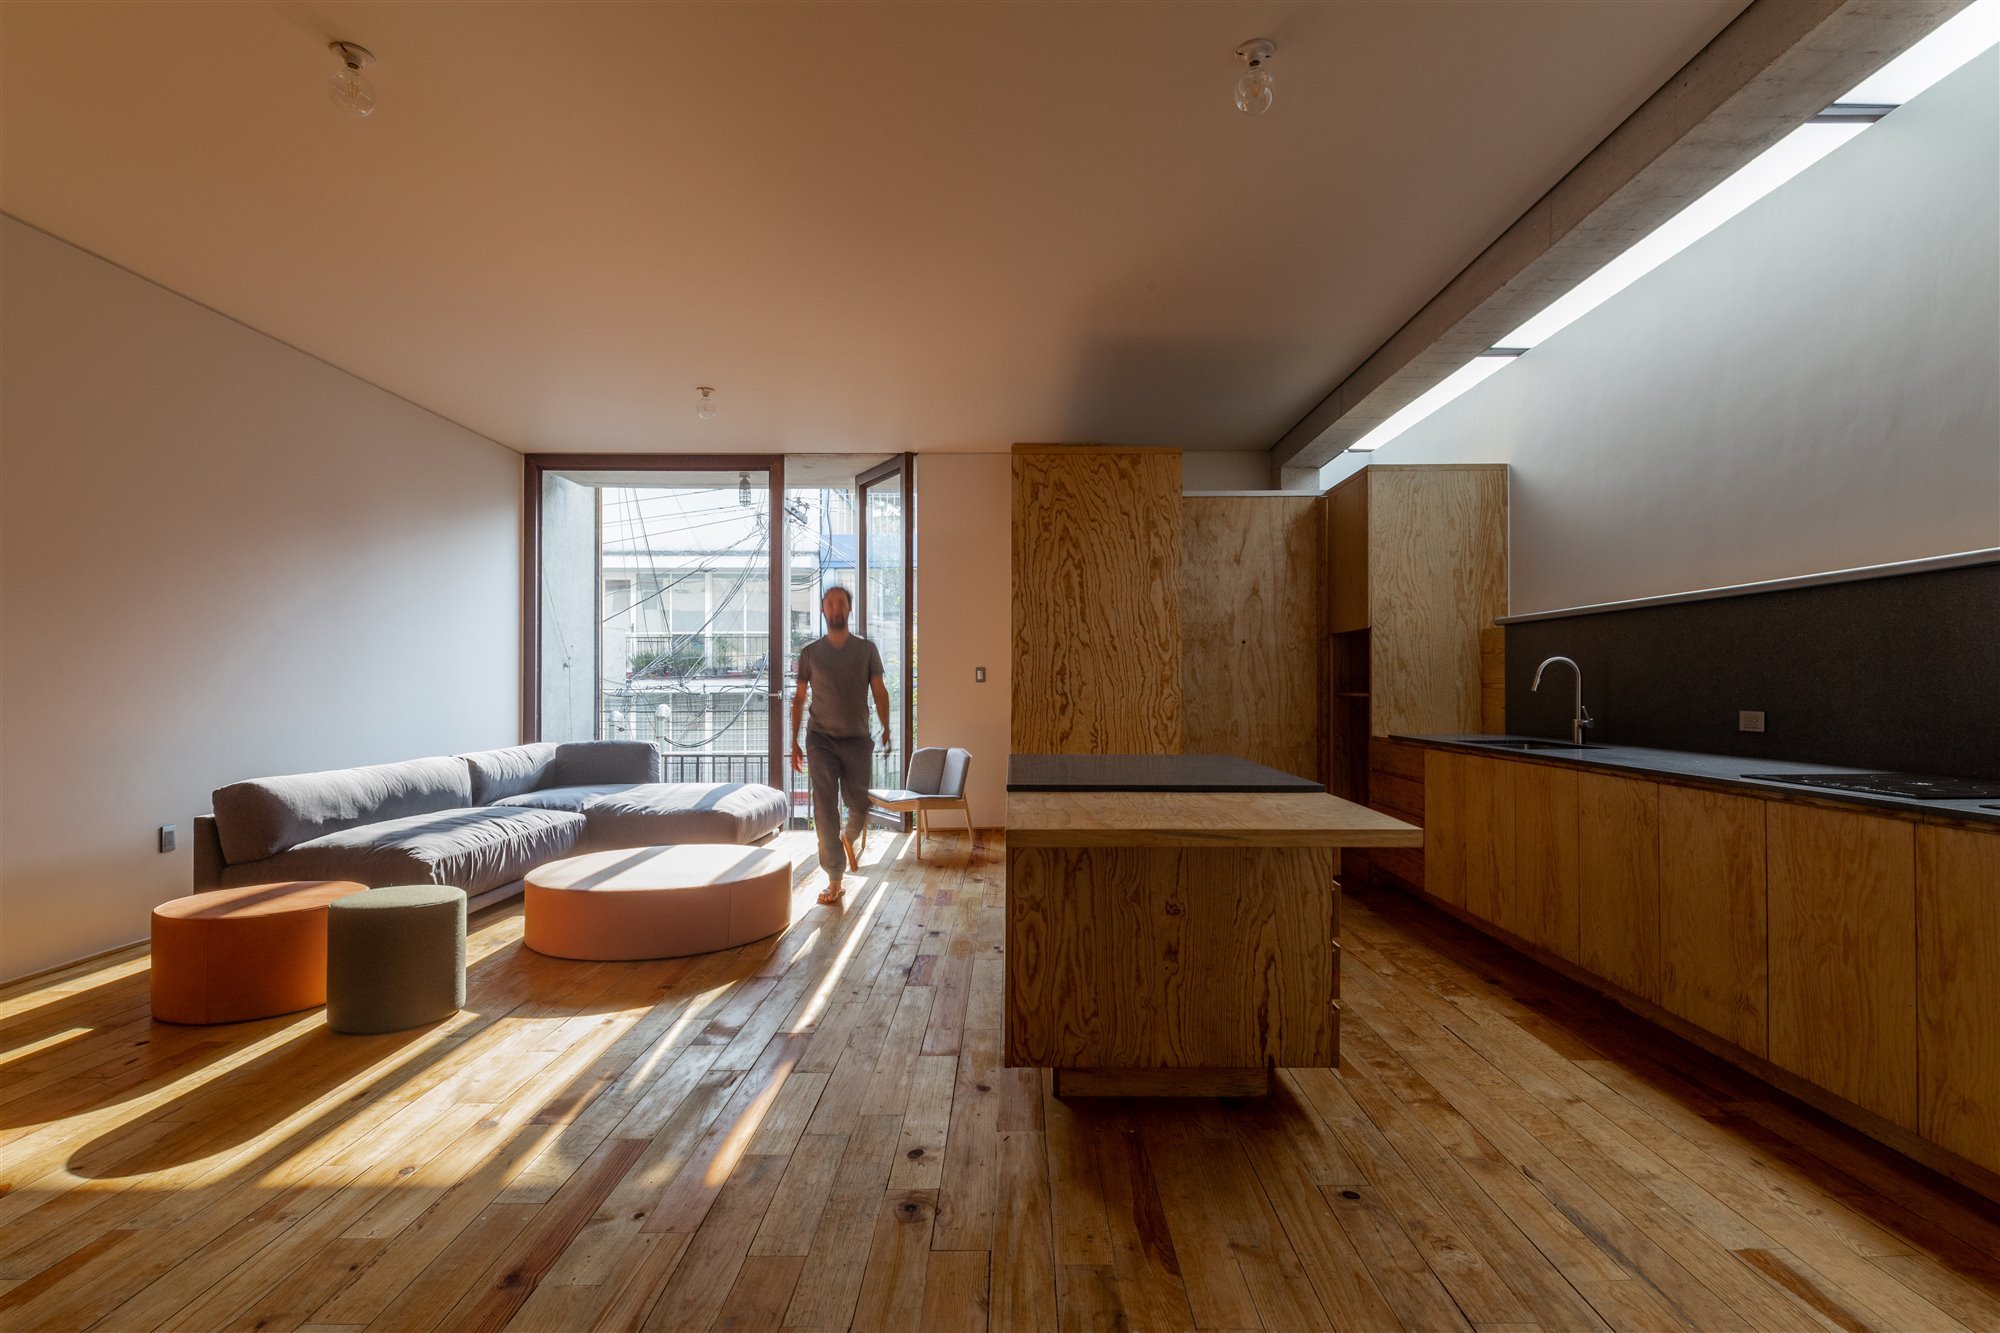 Apartamentos moderns en Mexico de lujo con interiores de madera cocina